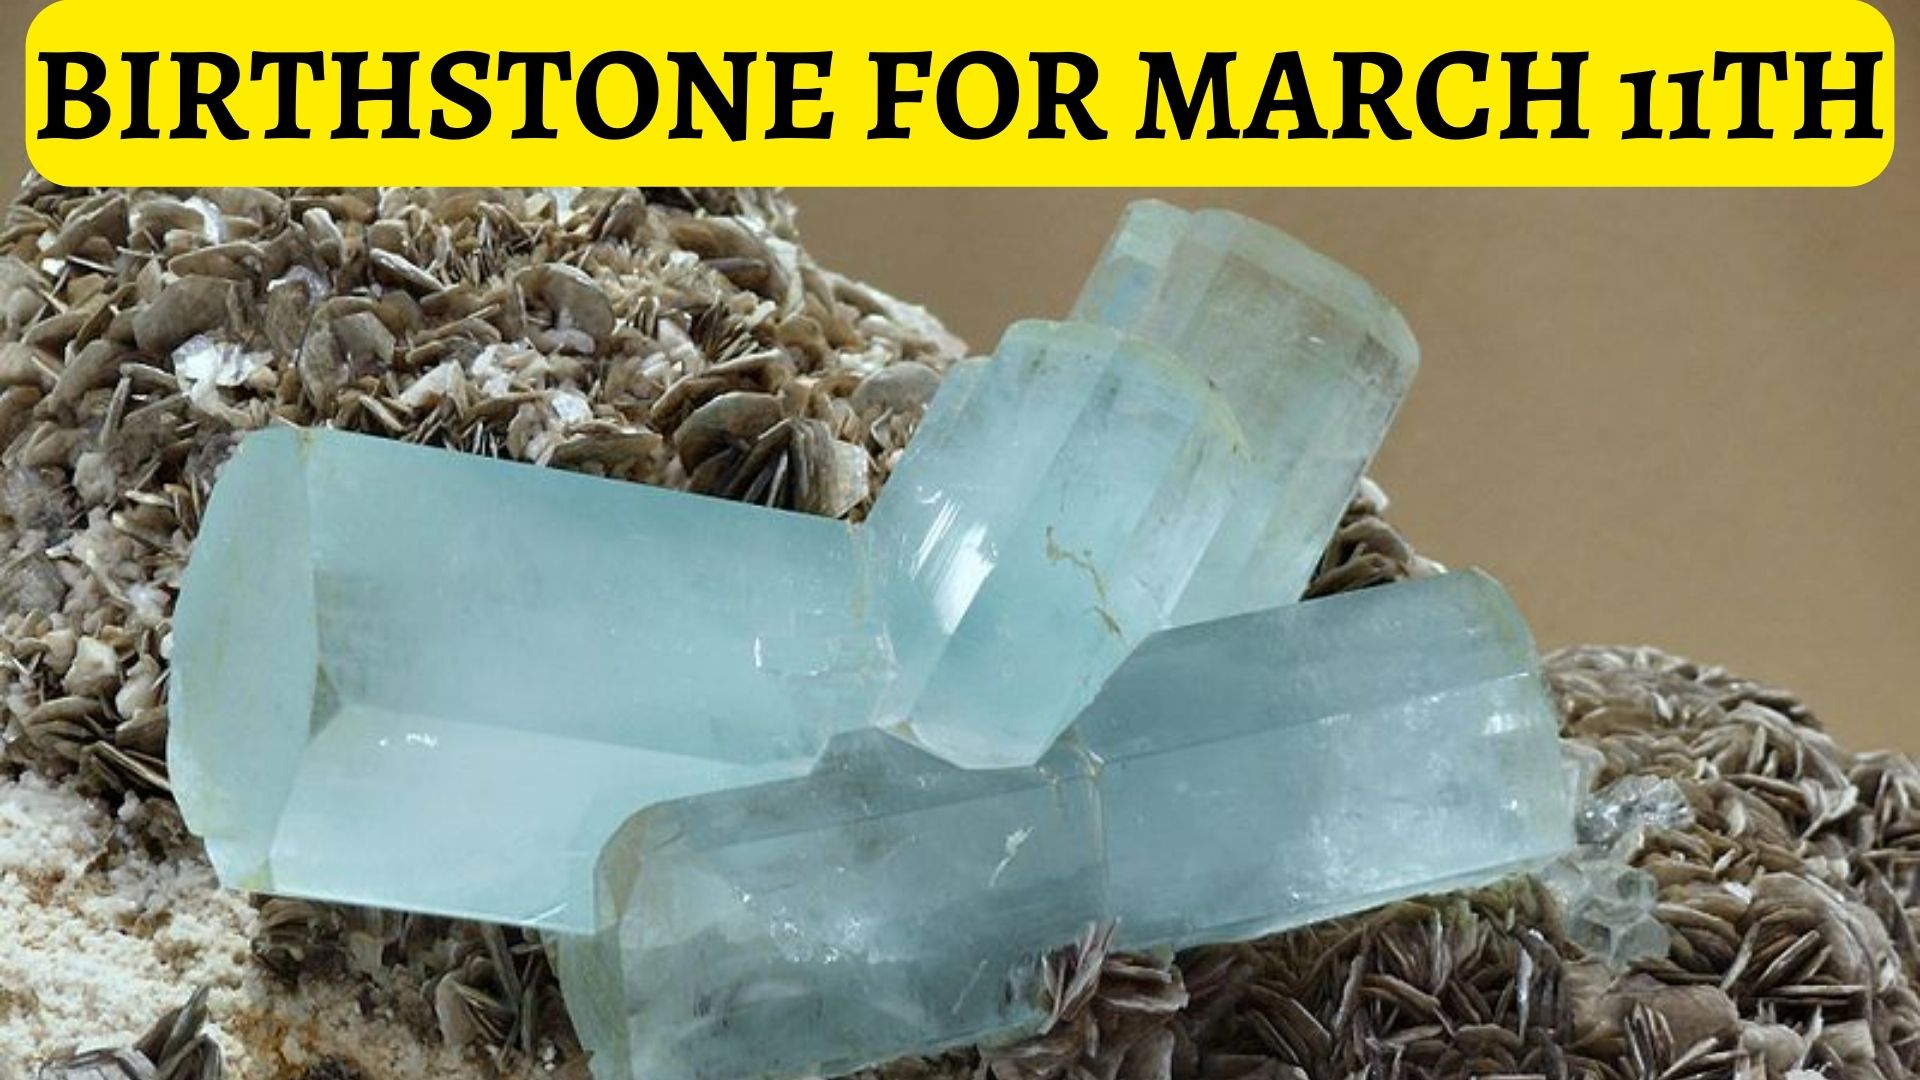 Birthstone For March 11th - Aquamarine And Bloodstone